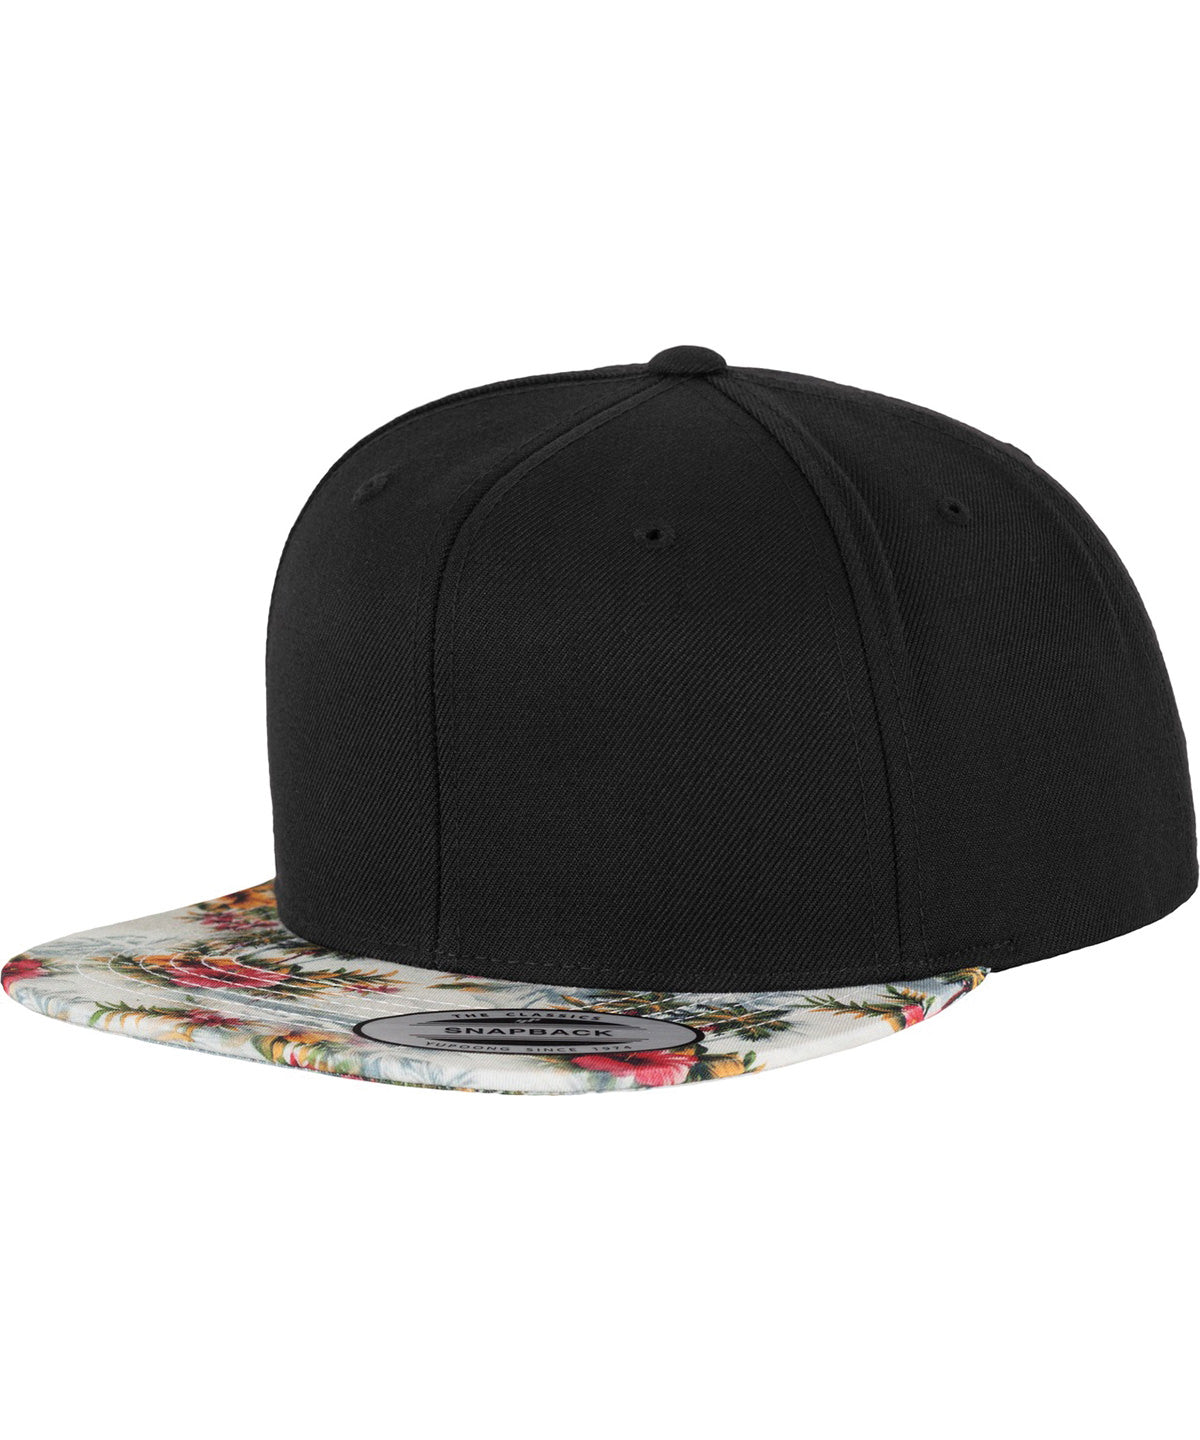 Black/Floral Mint - Fashion print snapback (6089DESIGNER) Caps Flexfit by Yupoong Headwear Schoolwear Centres